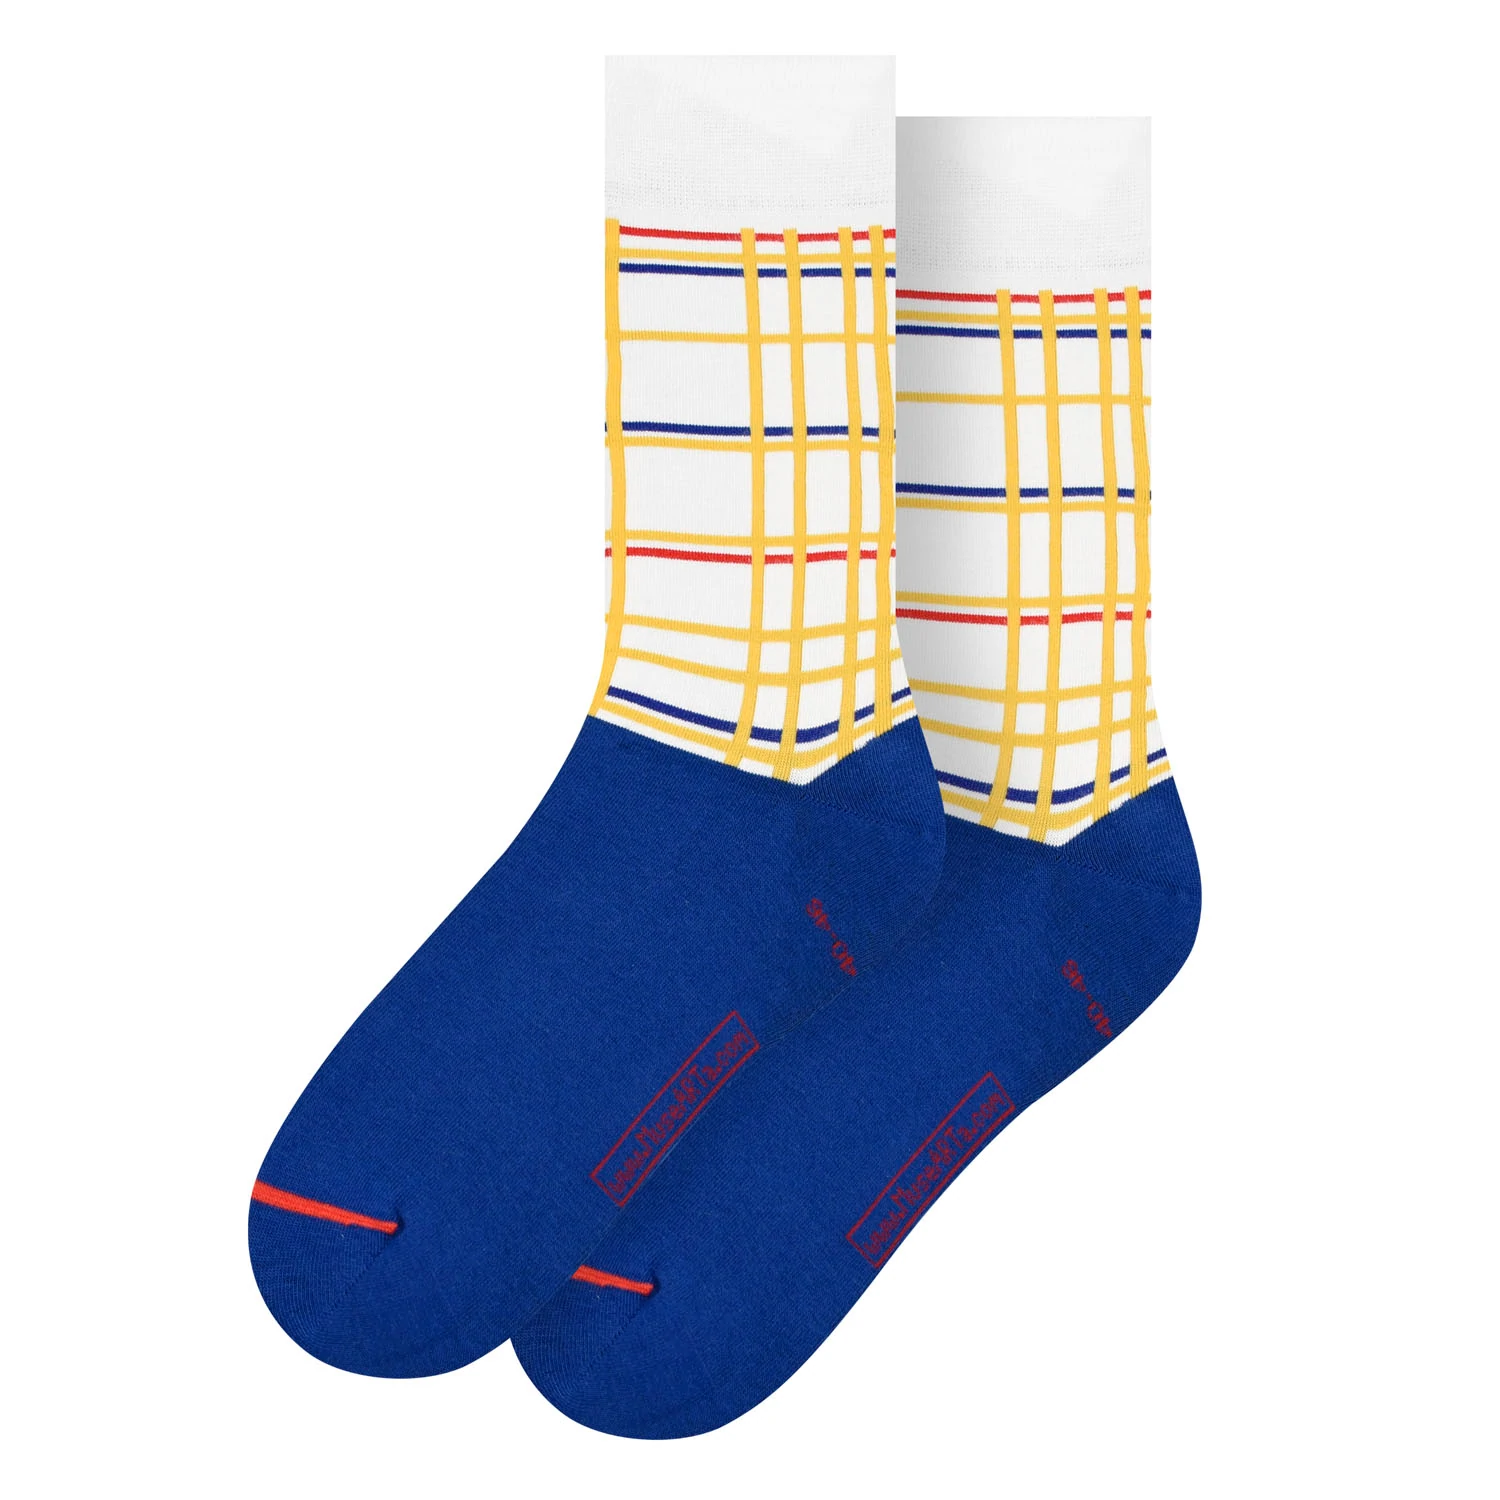 Socken; Piet Mondrian - New York City I; Baumwolle (78%), Polyamid (20%), Elastan (2%); blau, gelb, rot, weiss; 40-46; MuseARTa